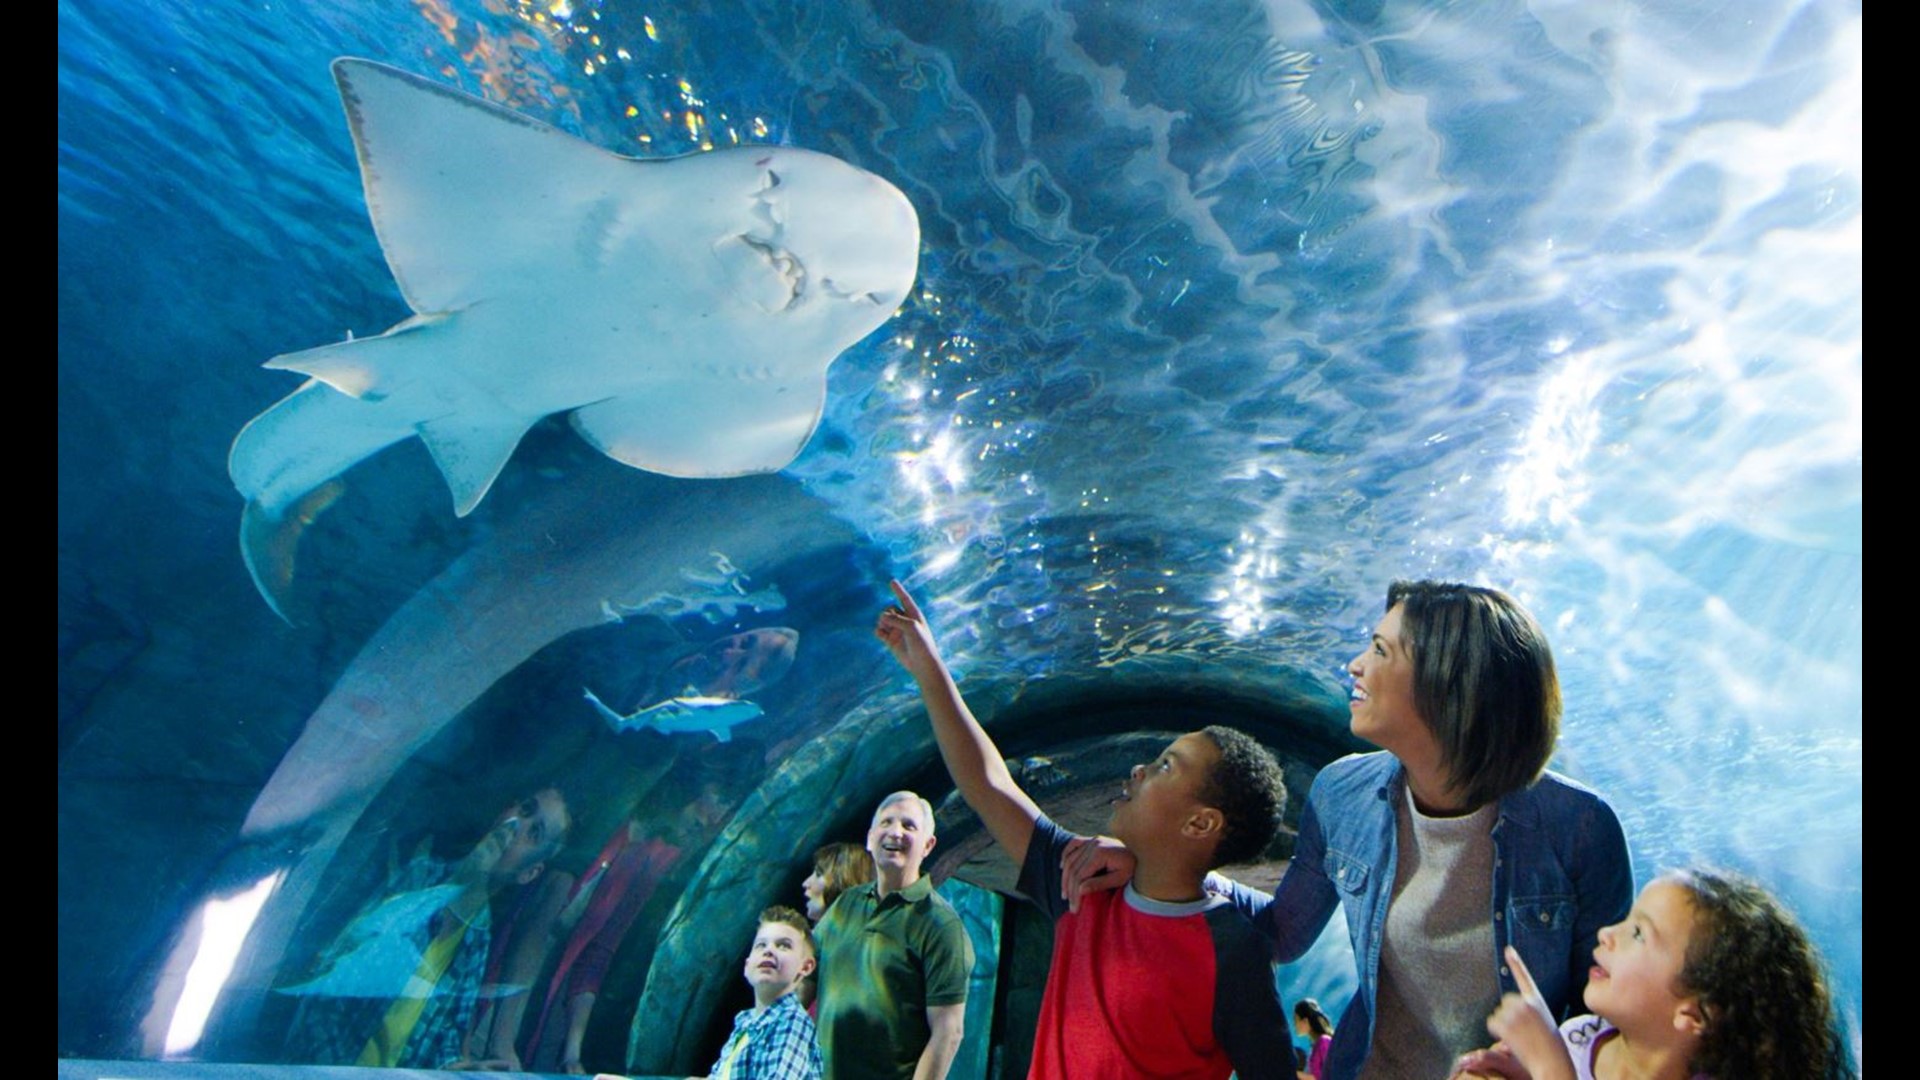 Newport Aquarium celebrates 20th anniversary with new exhibit, free